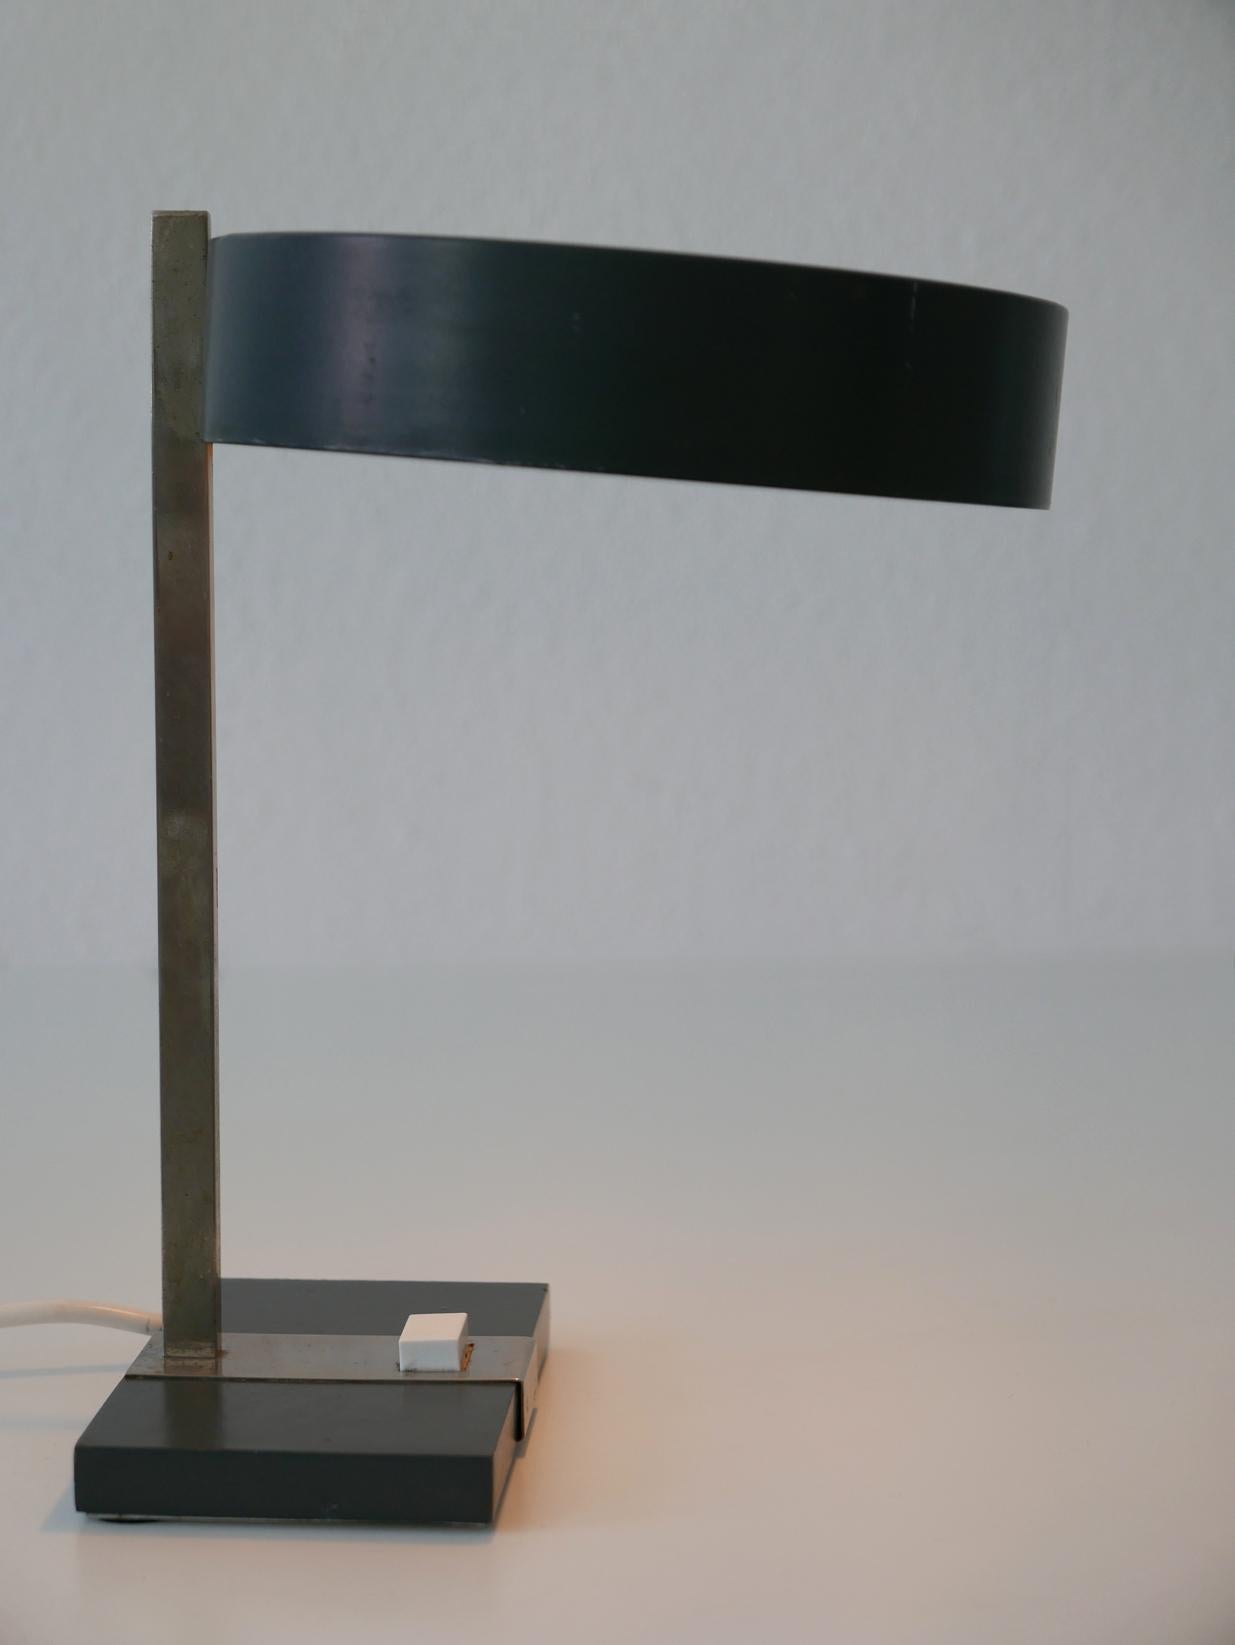 mid century modern table lamp